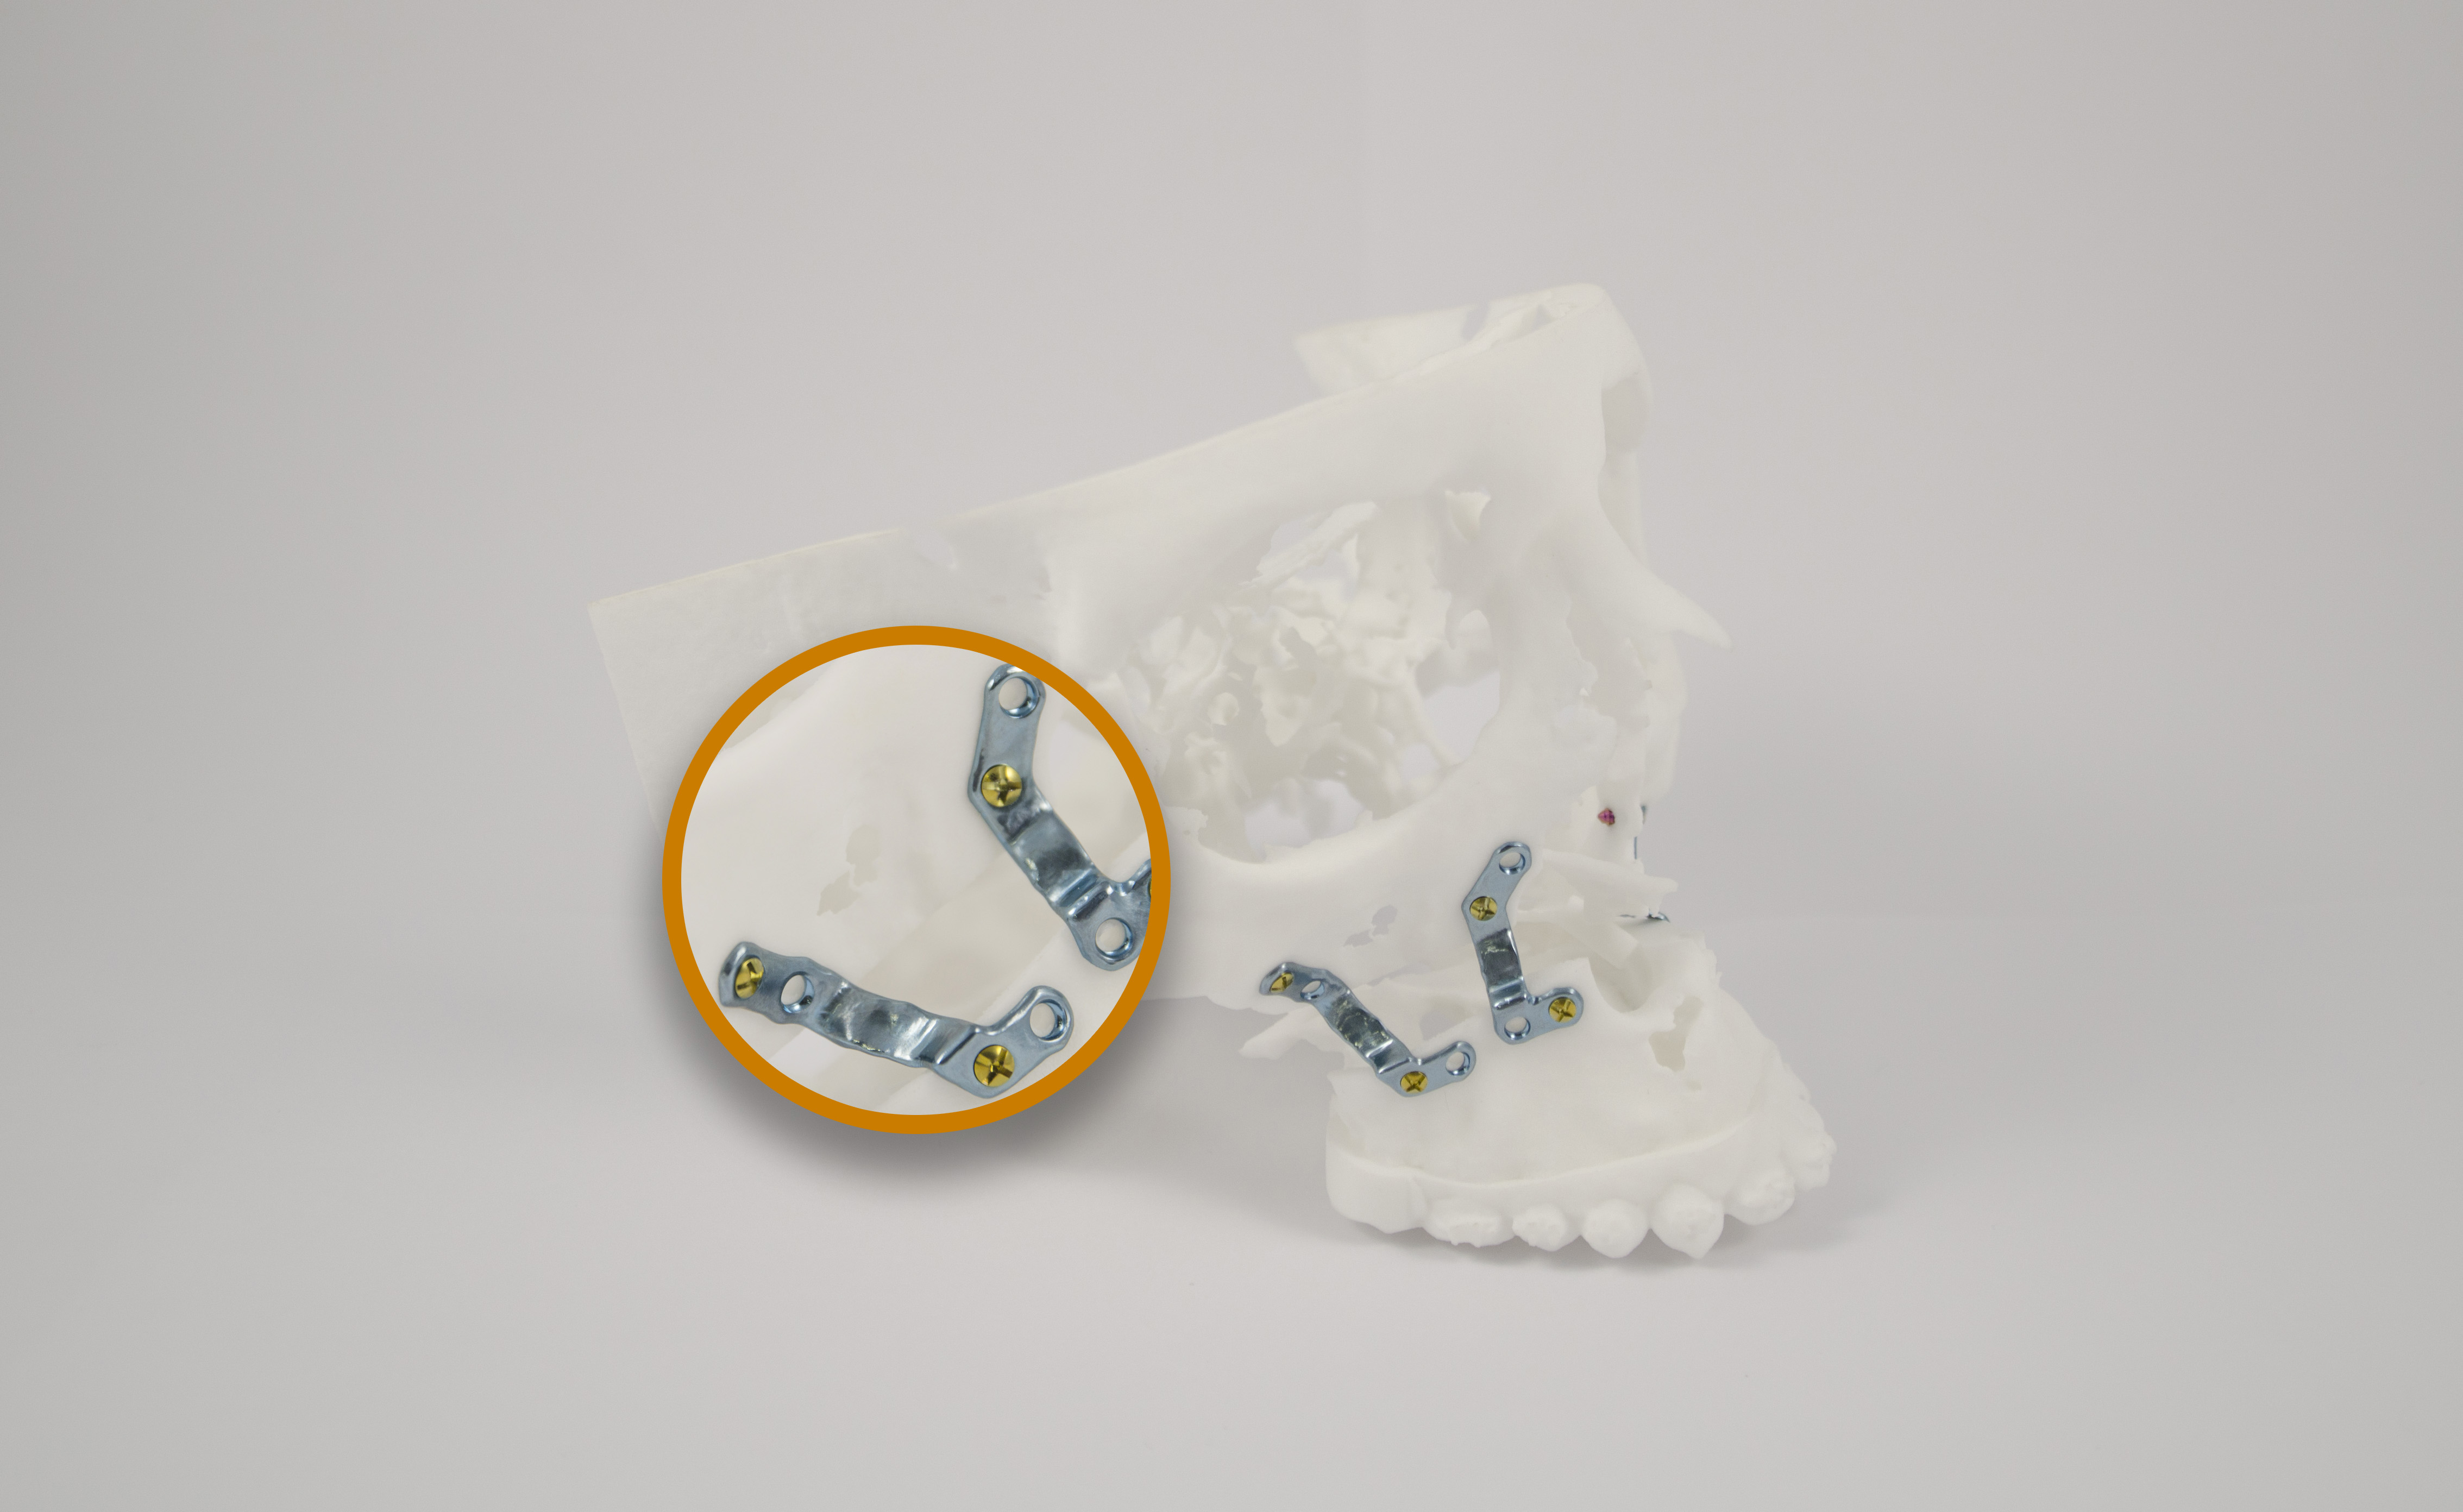 3D printing revolutionizes orthognathic surgery – Part 1